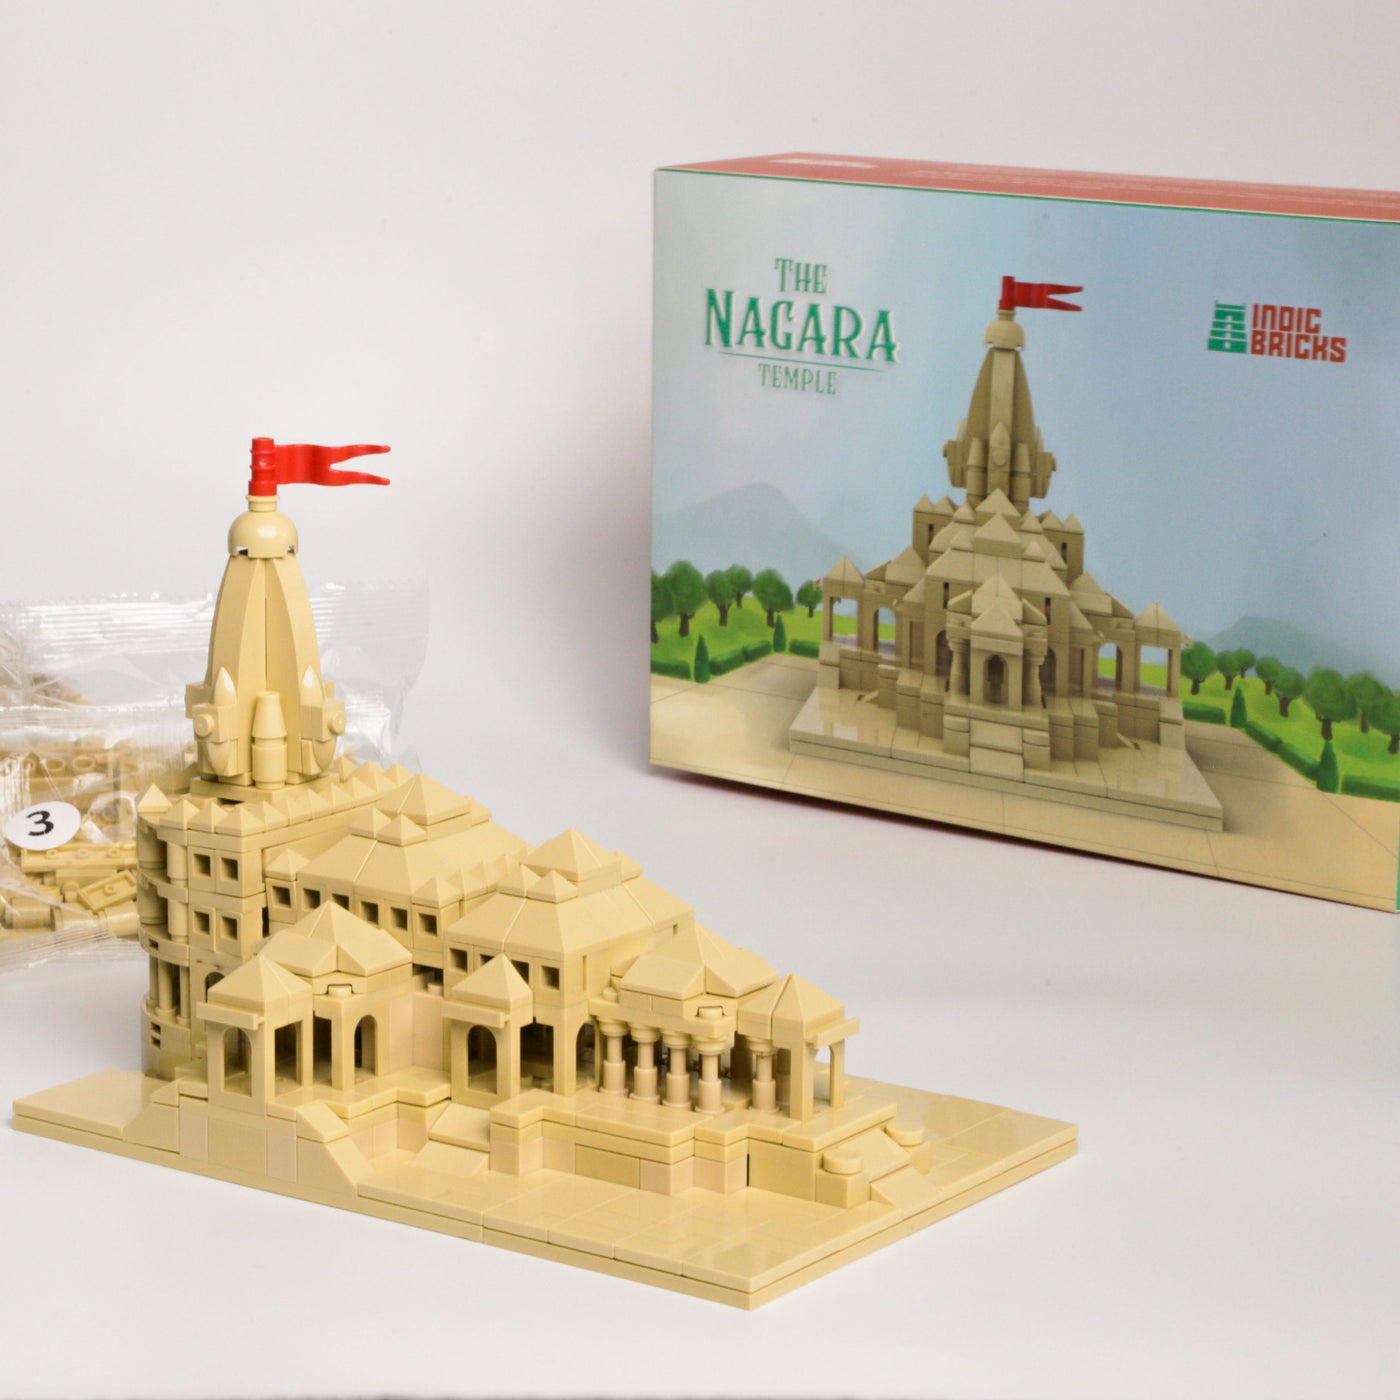 Nagara Temple Set by Indic Bricks